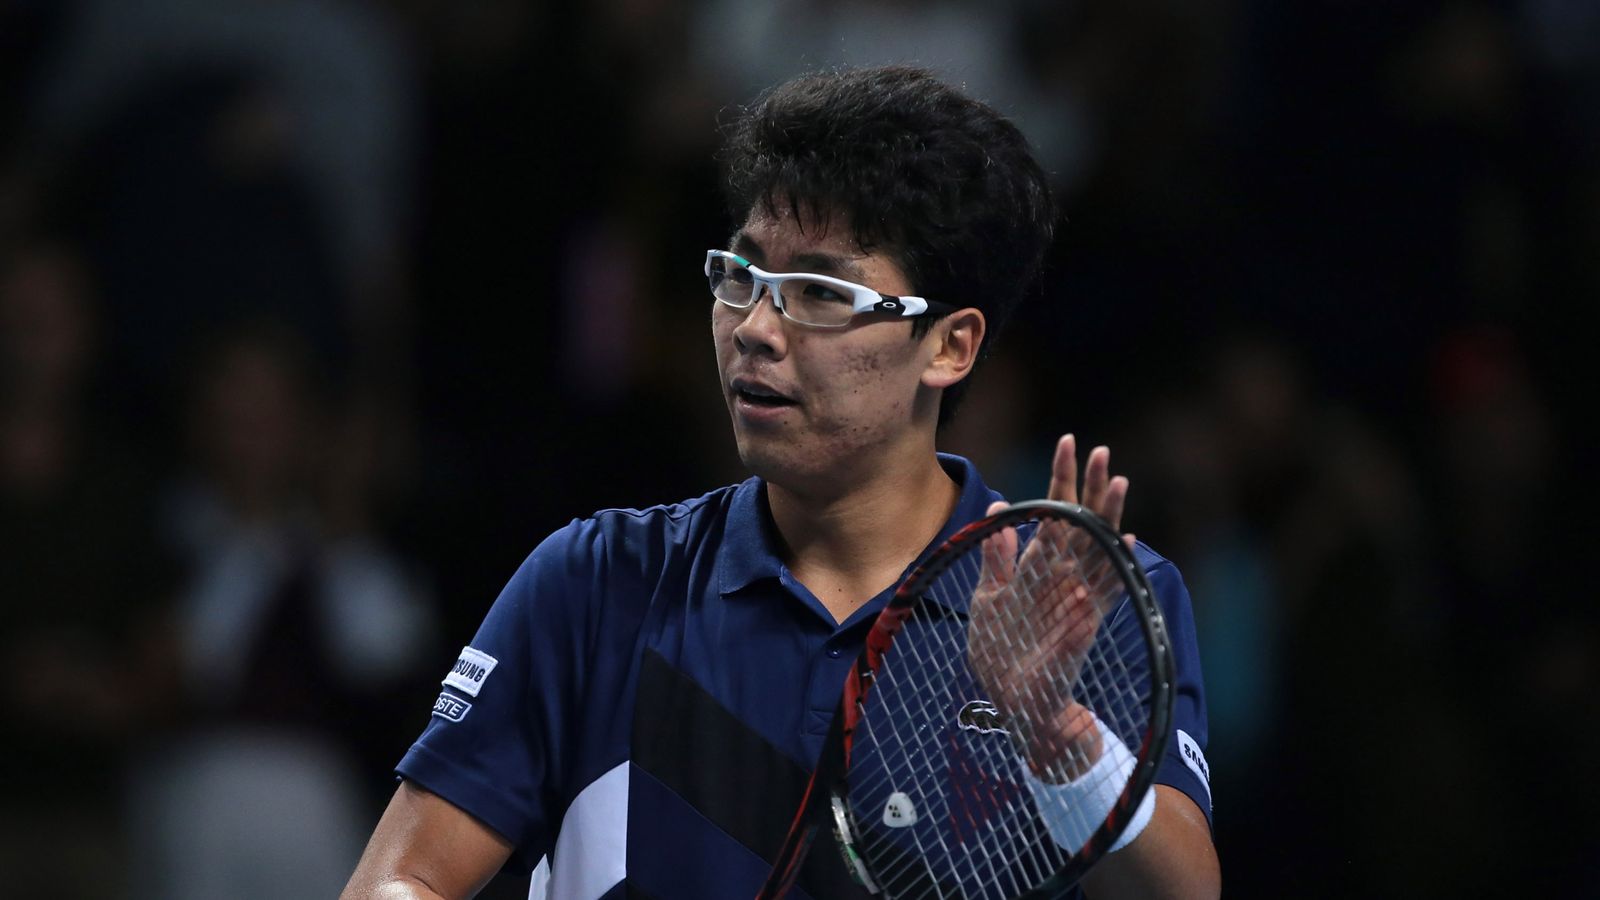 South Koreas Chung Hyeon claims inaugural Next Gen ATP Finals title Tennis News Sky Sports